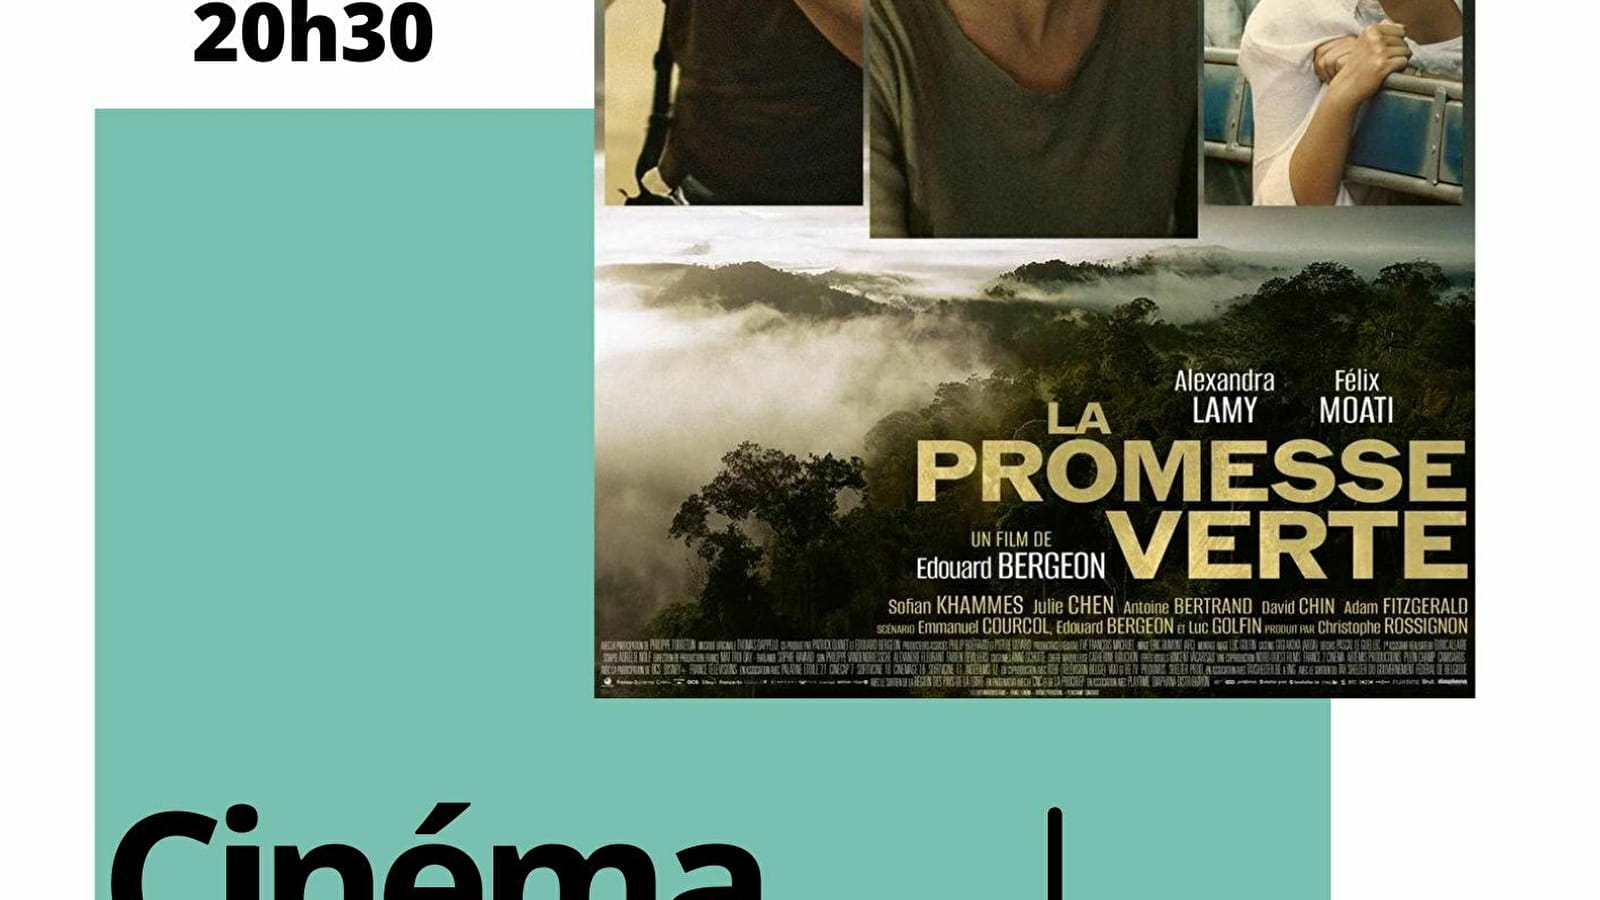 Cinéma  'La promesse verte'
